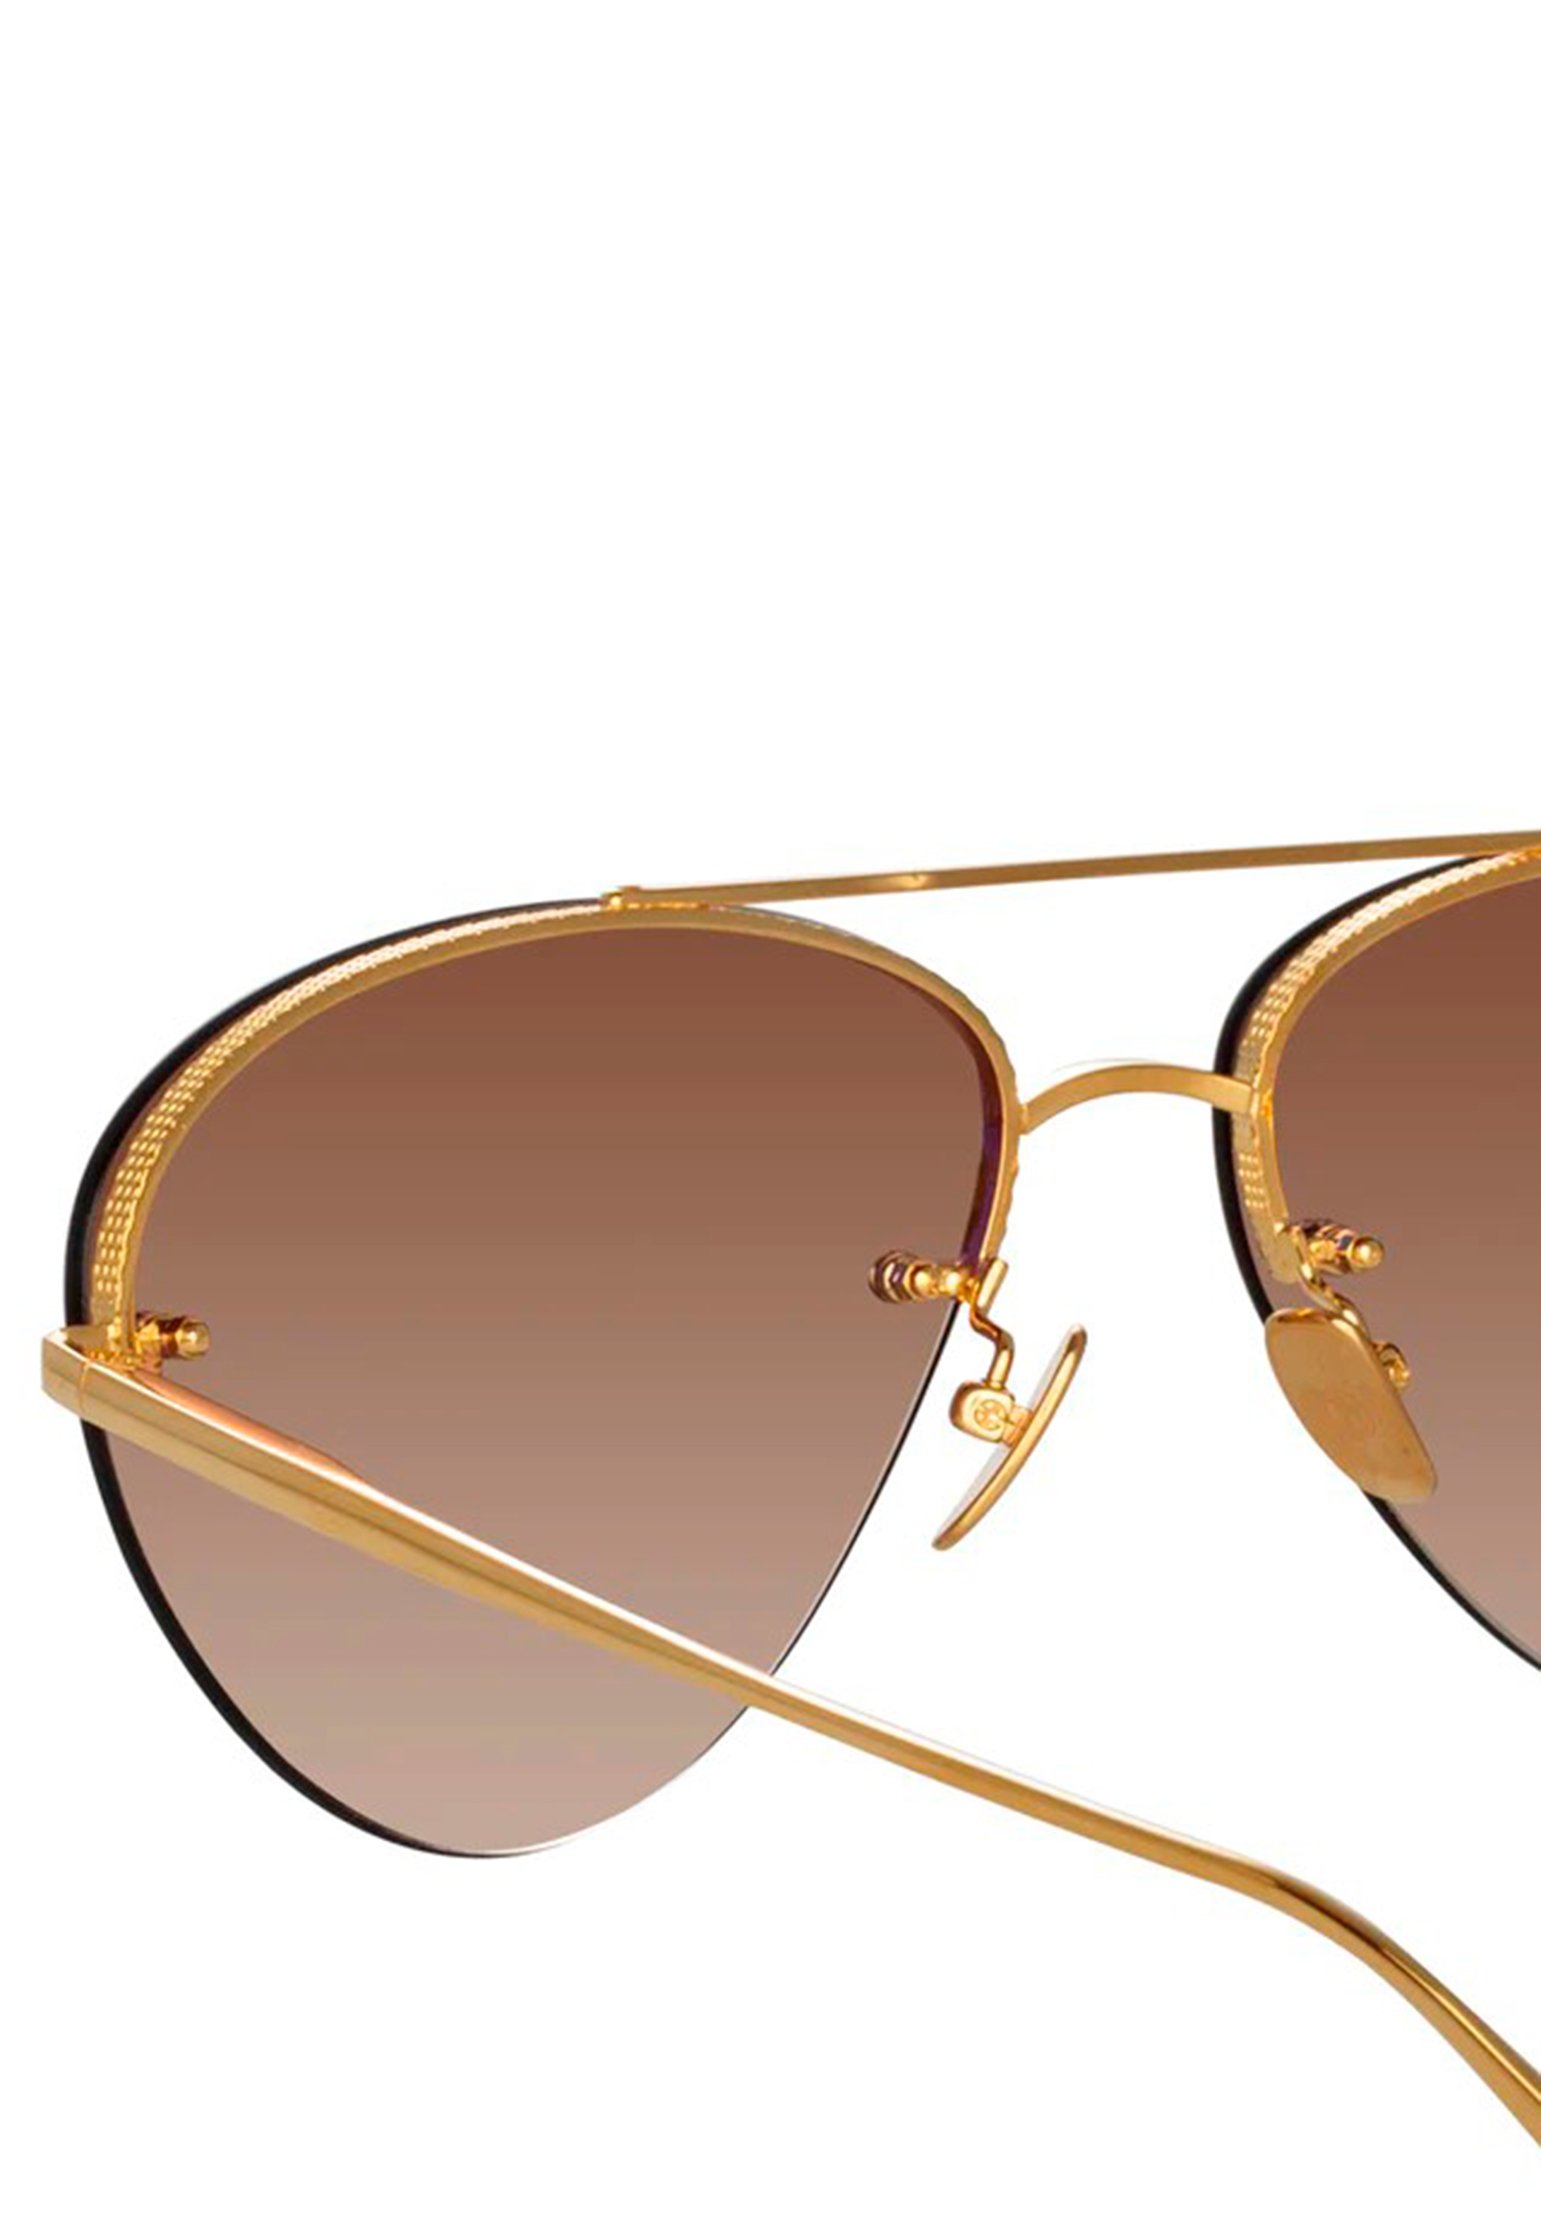 Sunglasses LINDA FARROW Color: gold (Code: 4027) in online store Allure